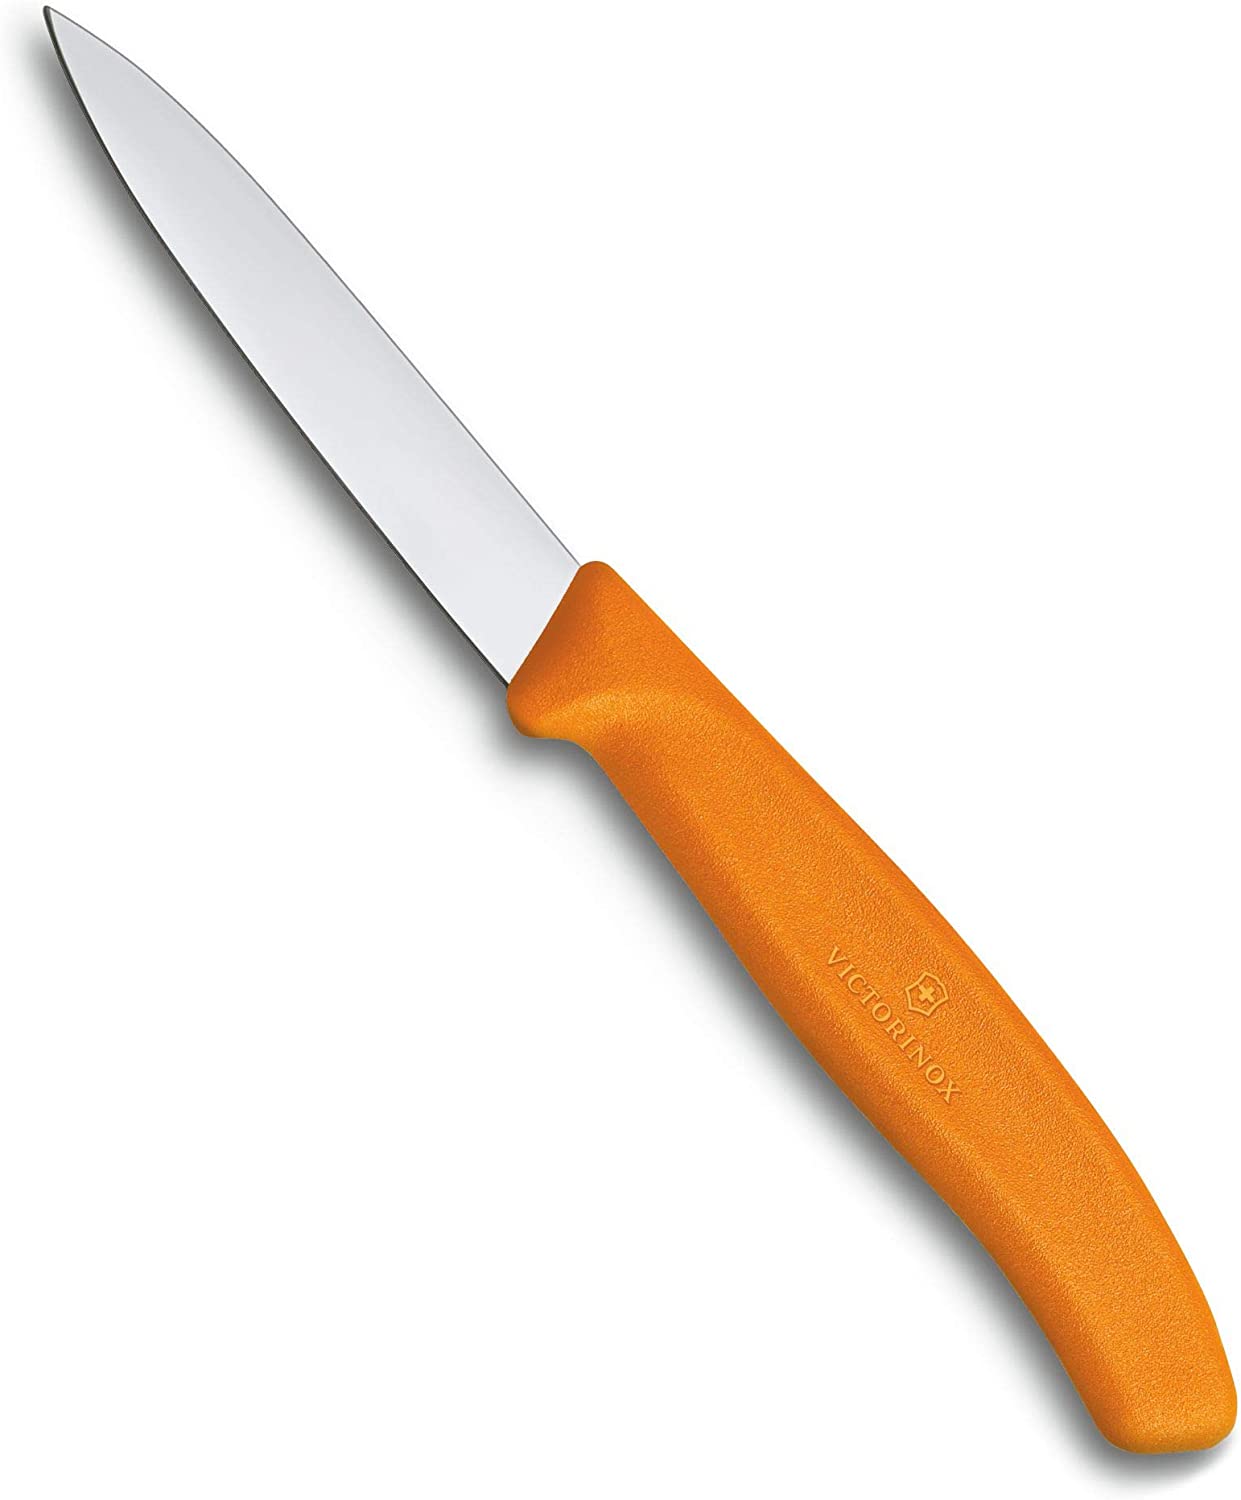 Victorinox kitchen knife for vegetables (8cm blade, non-slip handle, center point, stainless steel, dishwasher-safe) orange